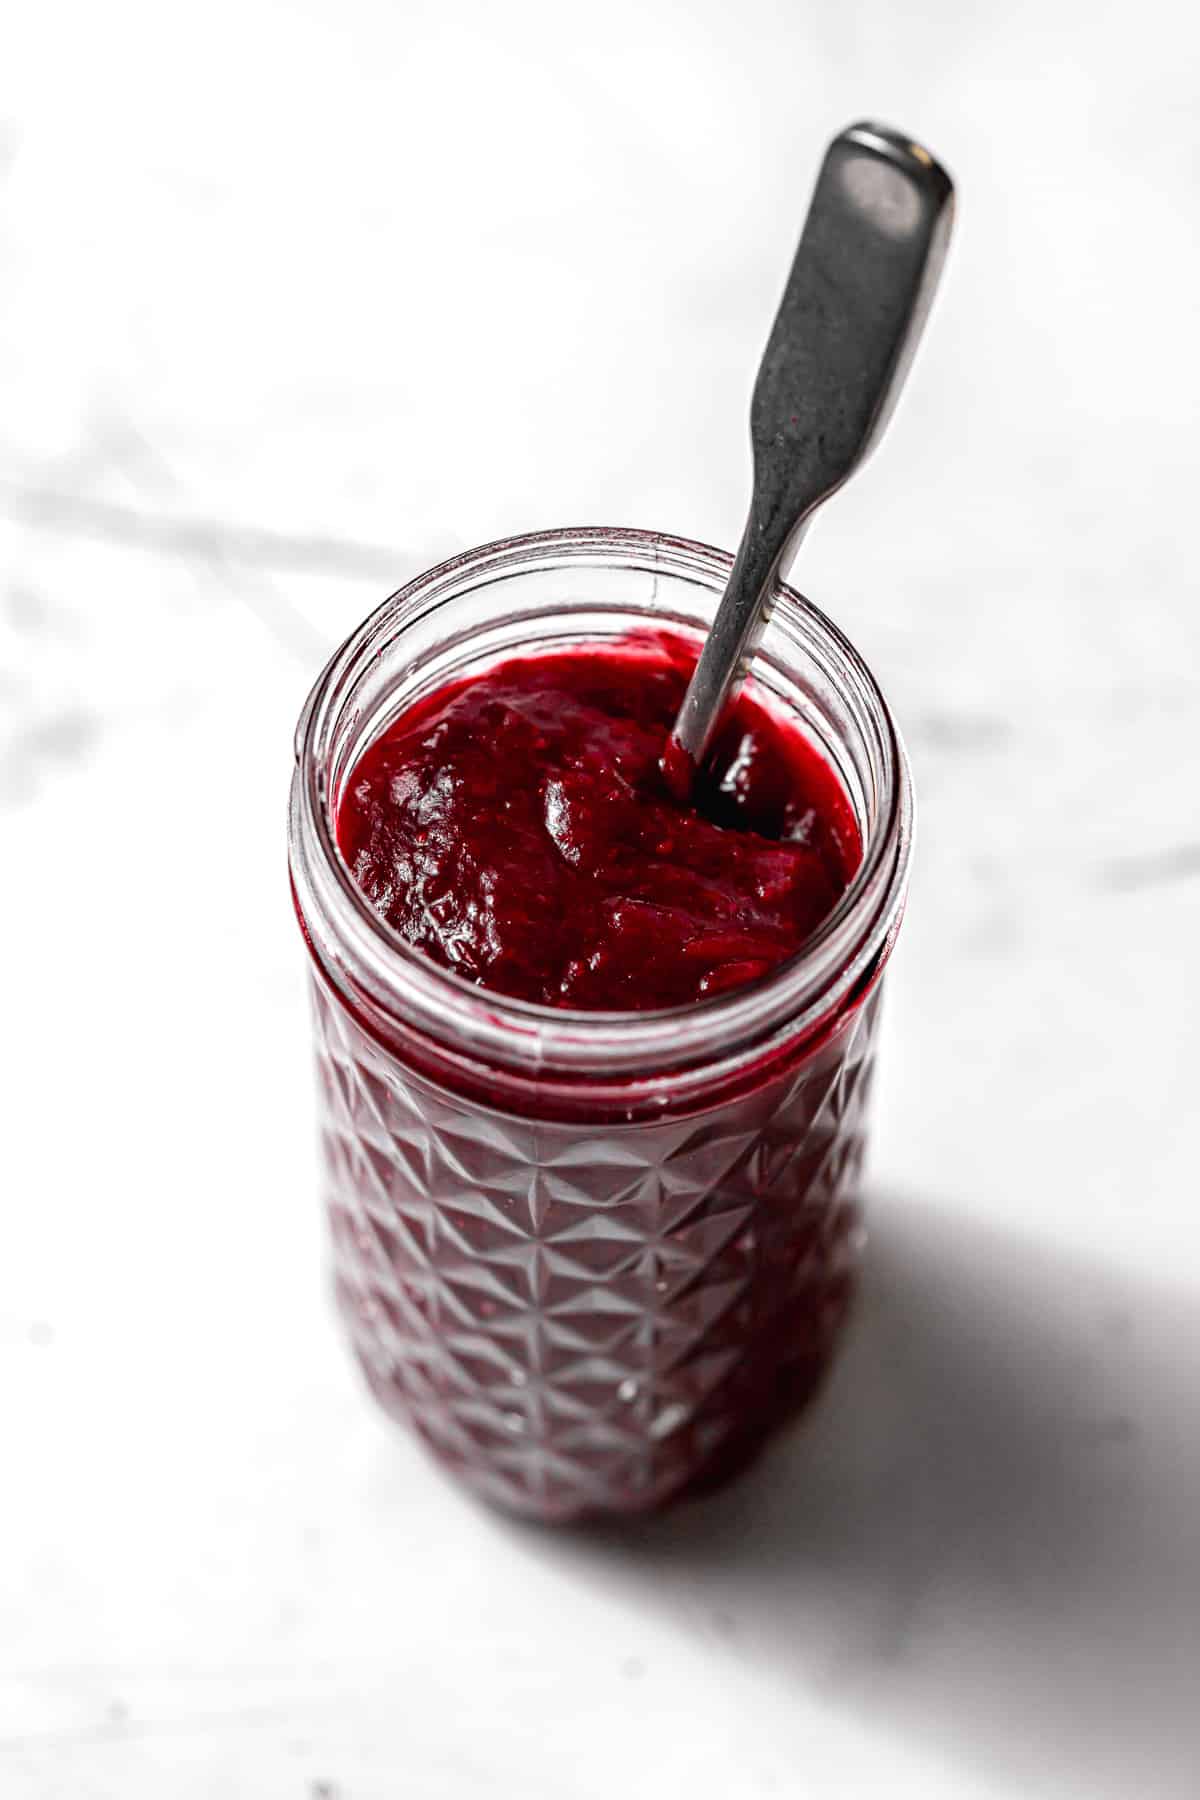 cranberry jam in glass jar.